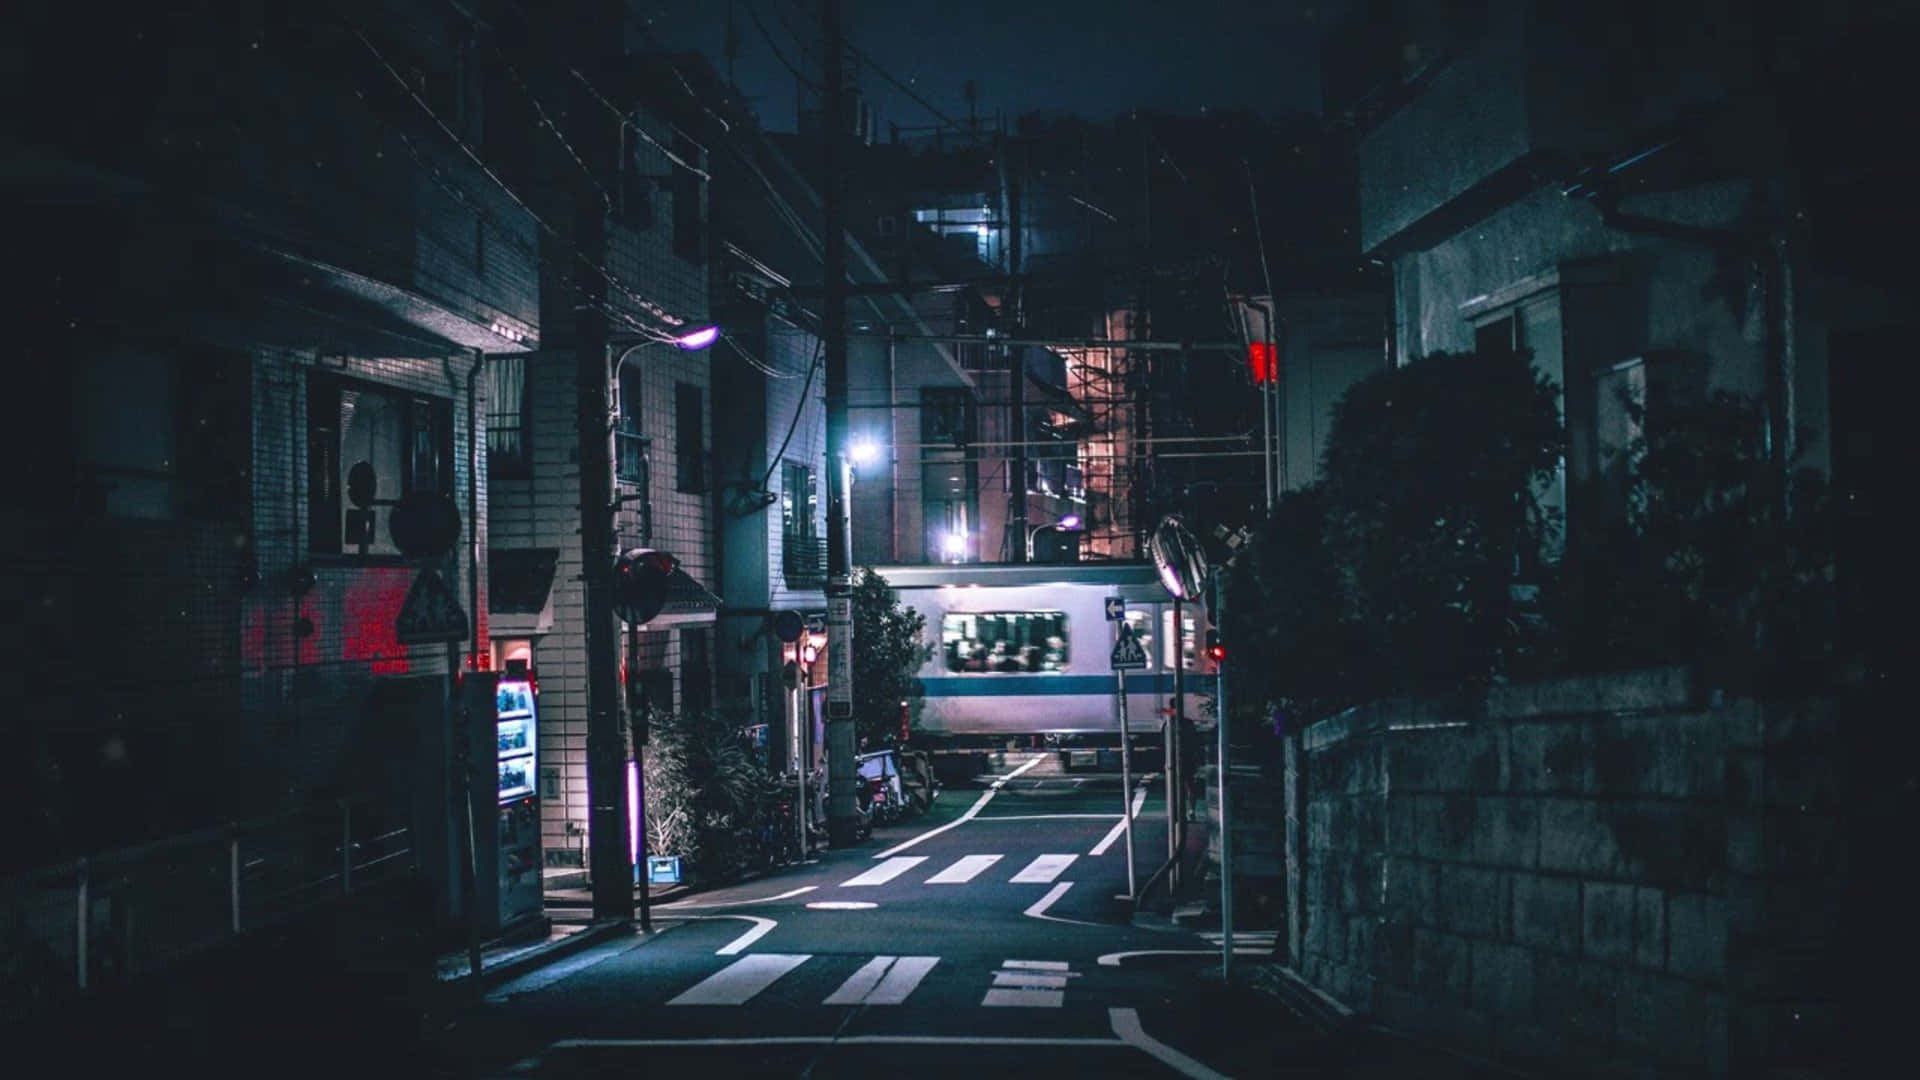 Dark Aesthetic Street Picture